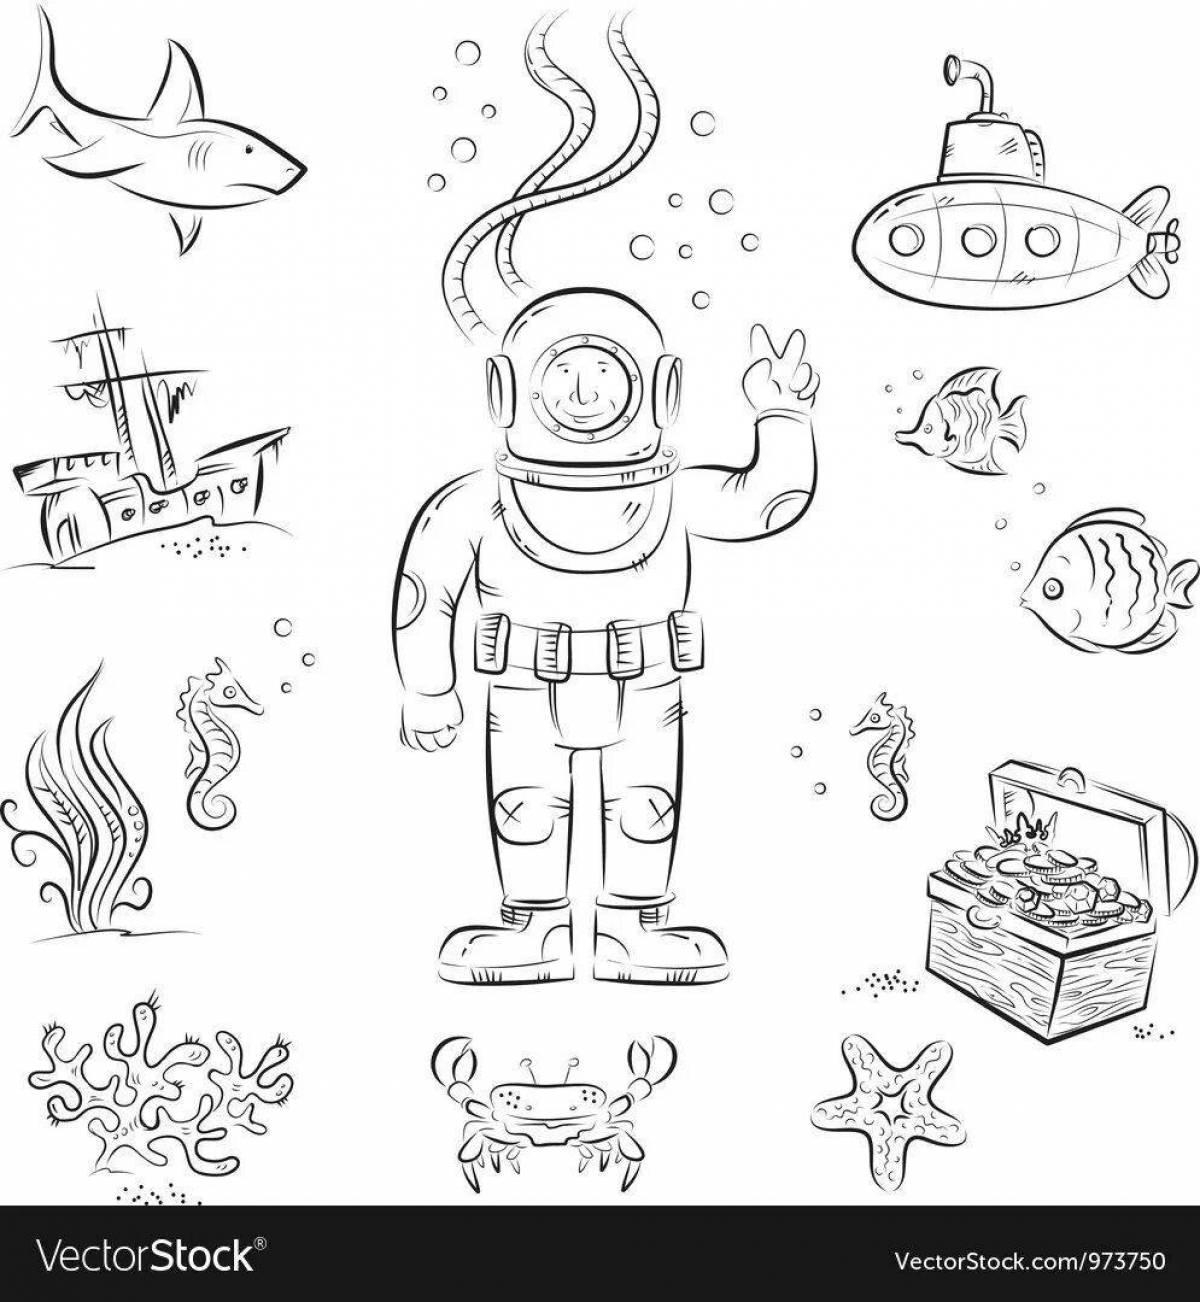 Majestic scuba diver coloring page